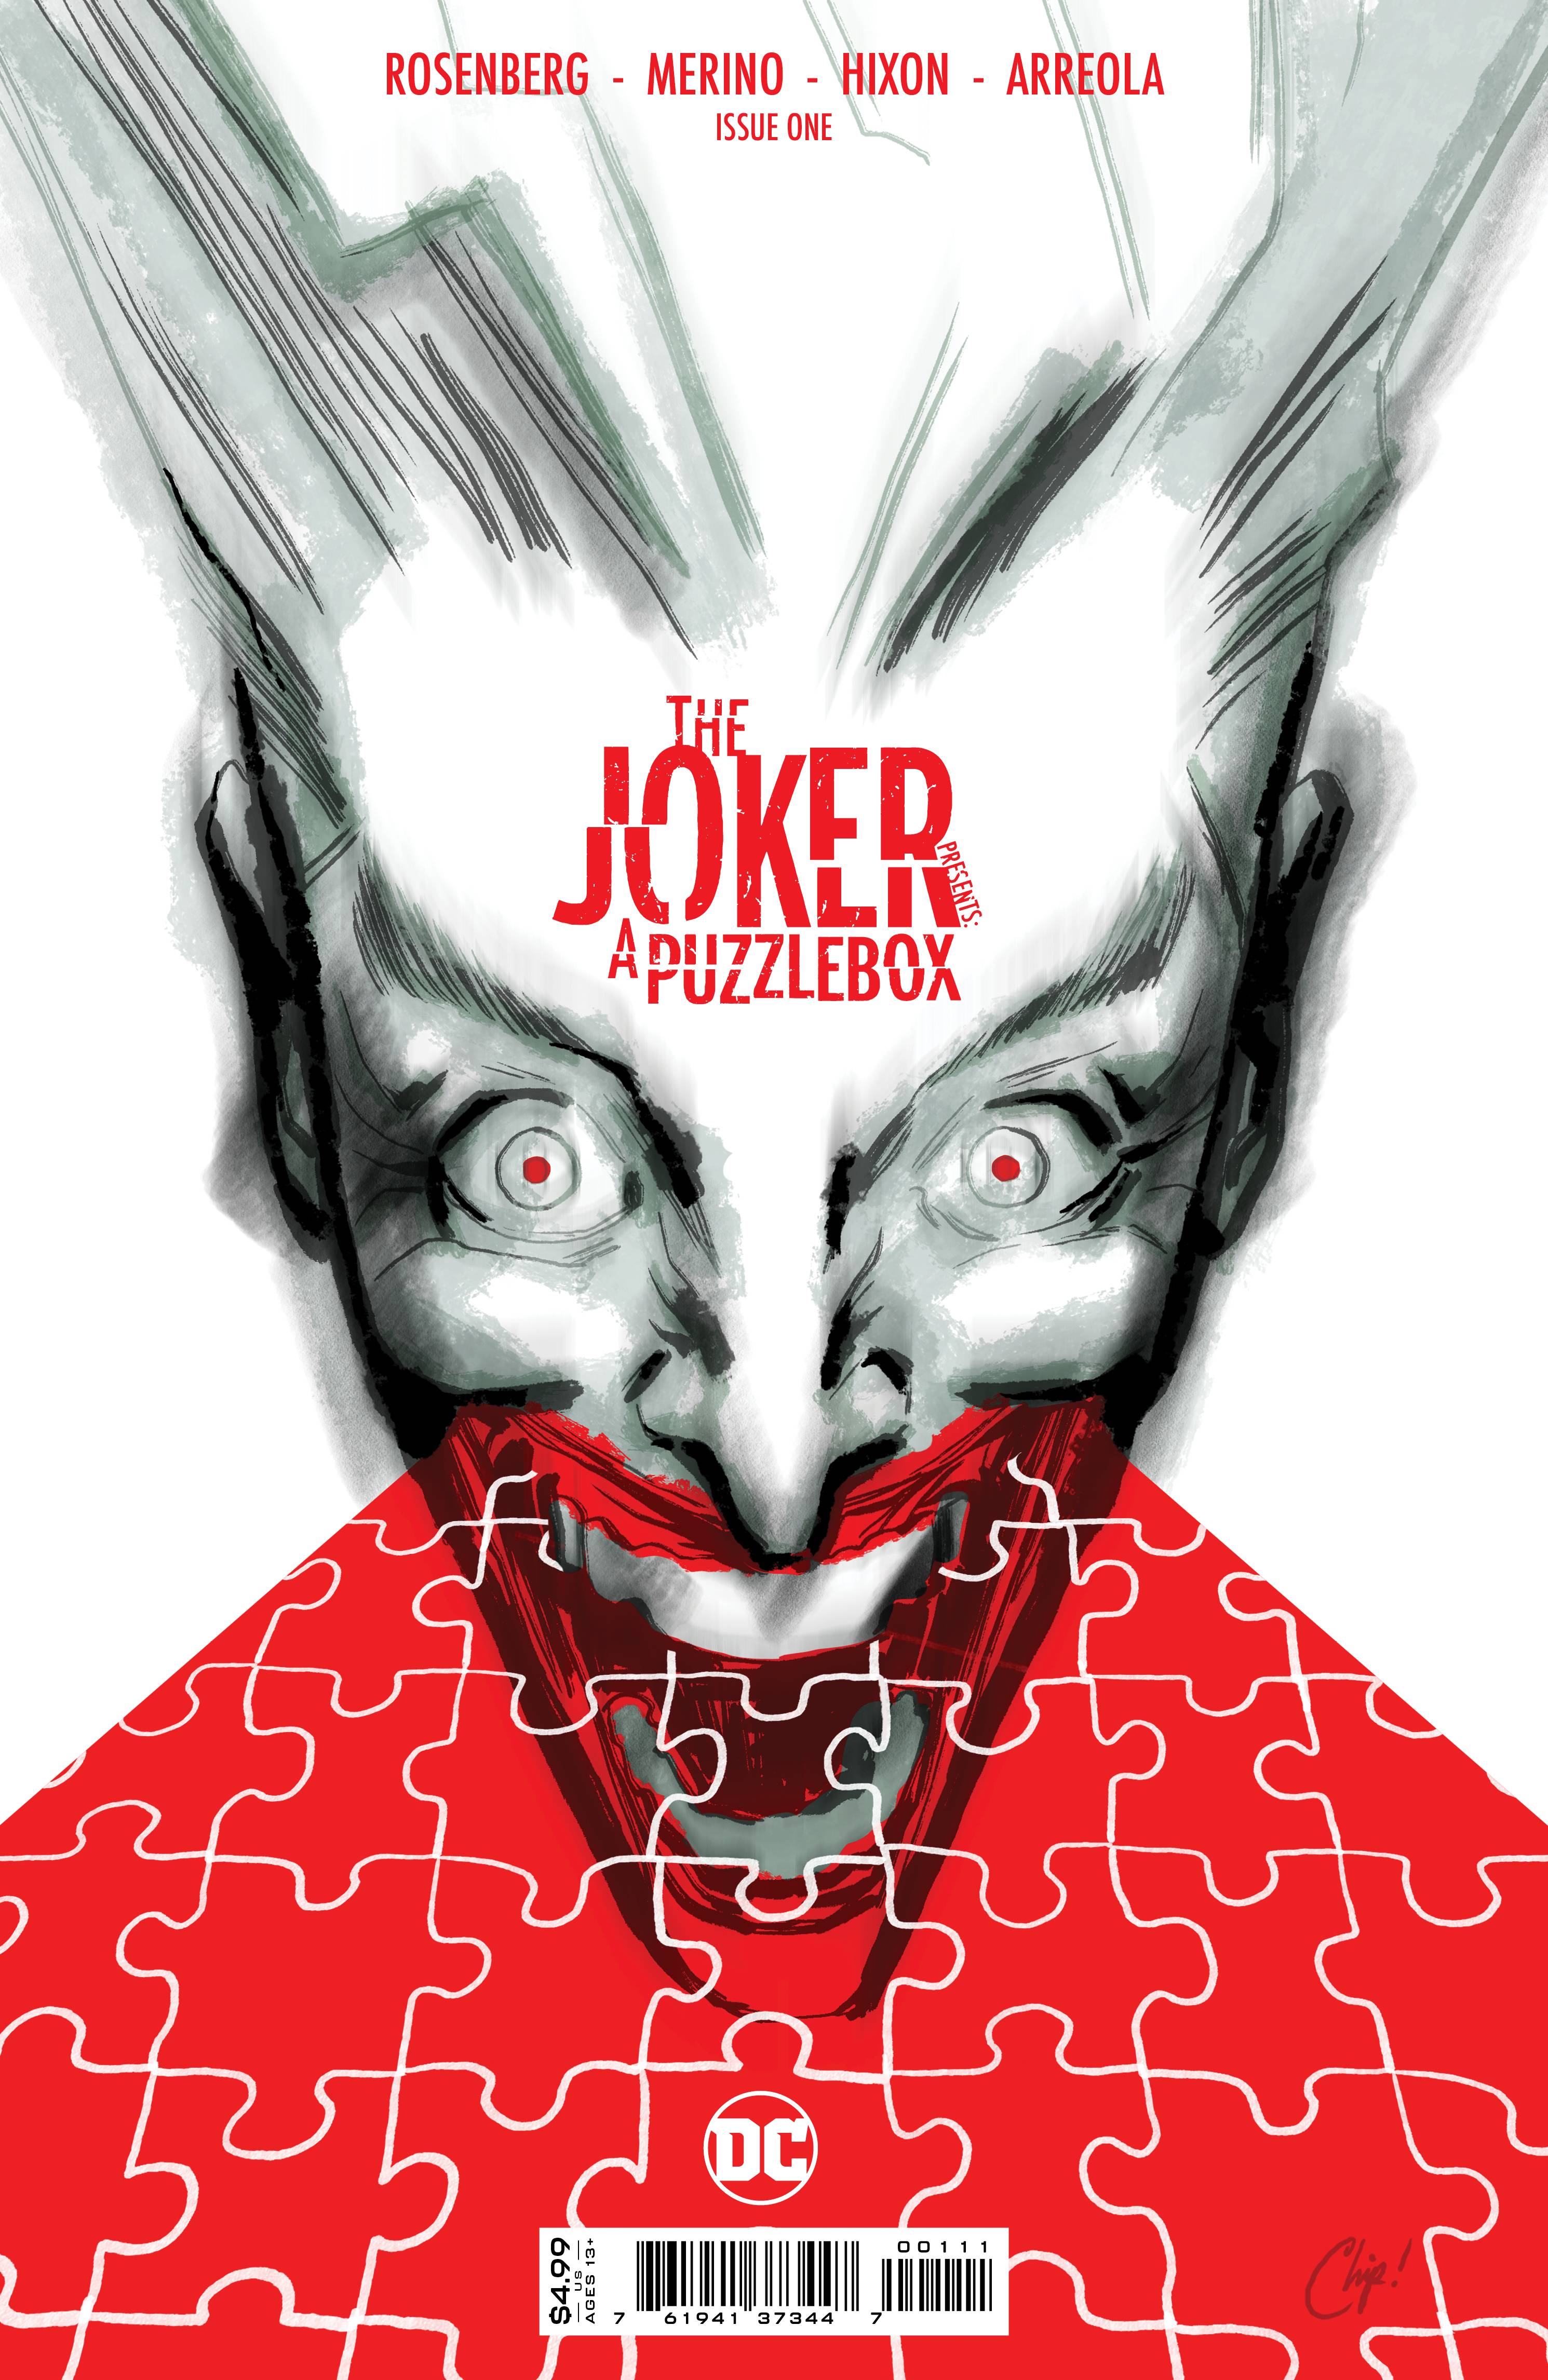 JOKER PRESENTS A PUZZLEBOX #1 CVR A | Game Master's Emporium (The New GME)